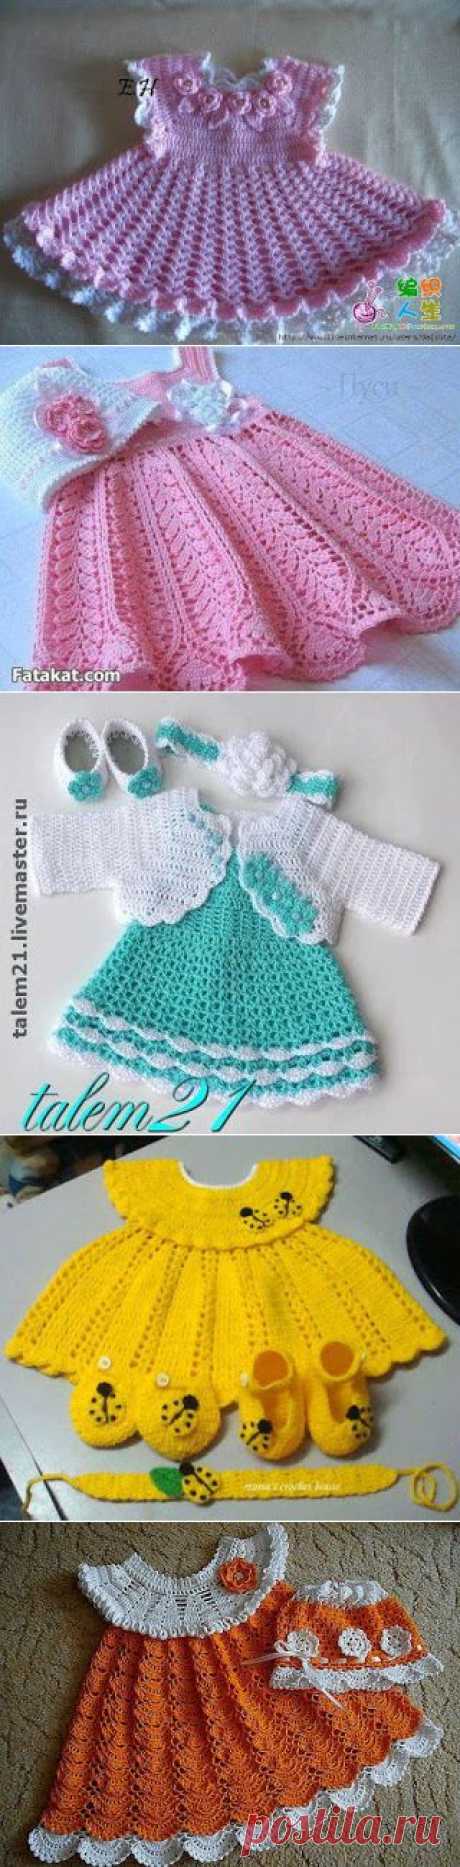 Mary Helen artesanatos croche e trico: Vestidos bebe